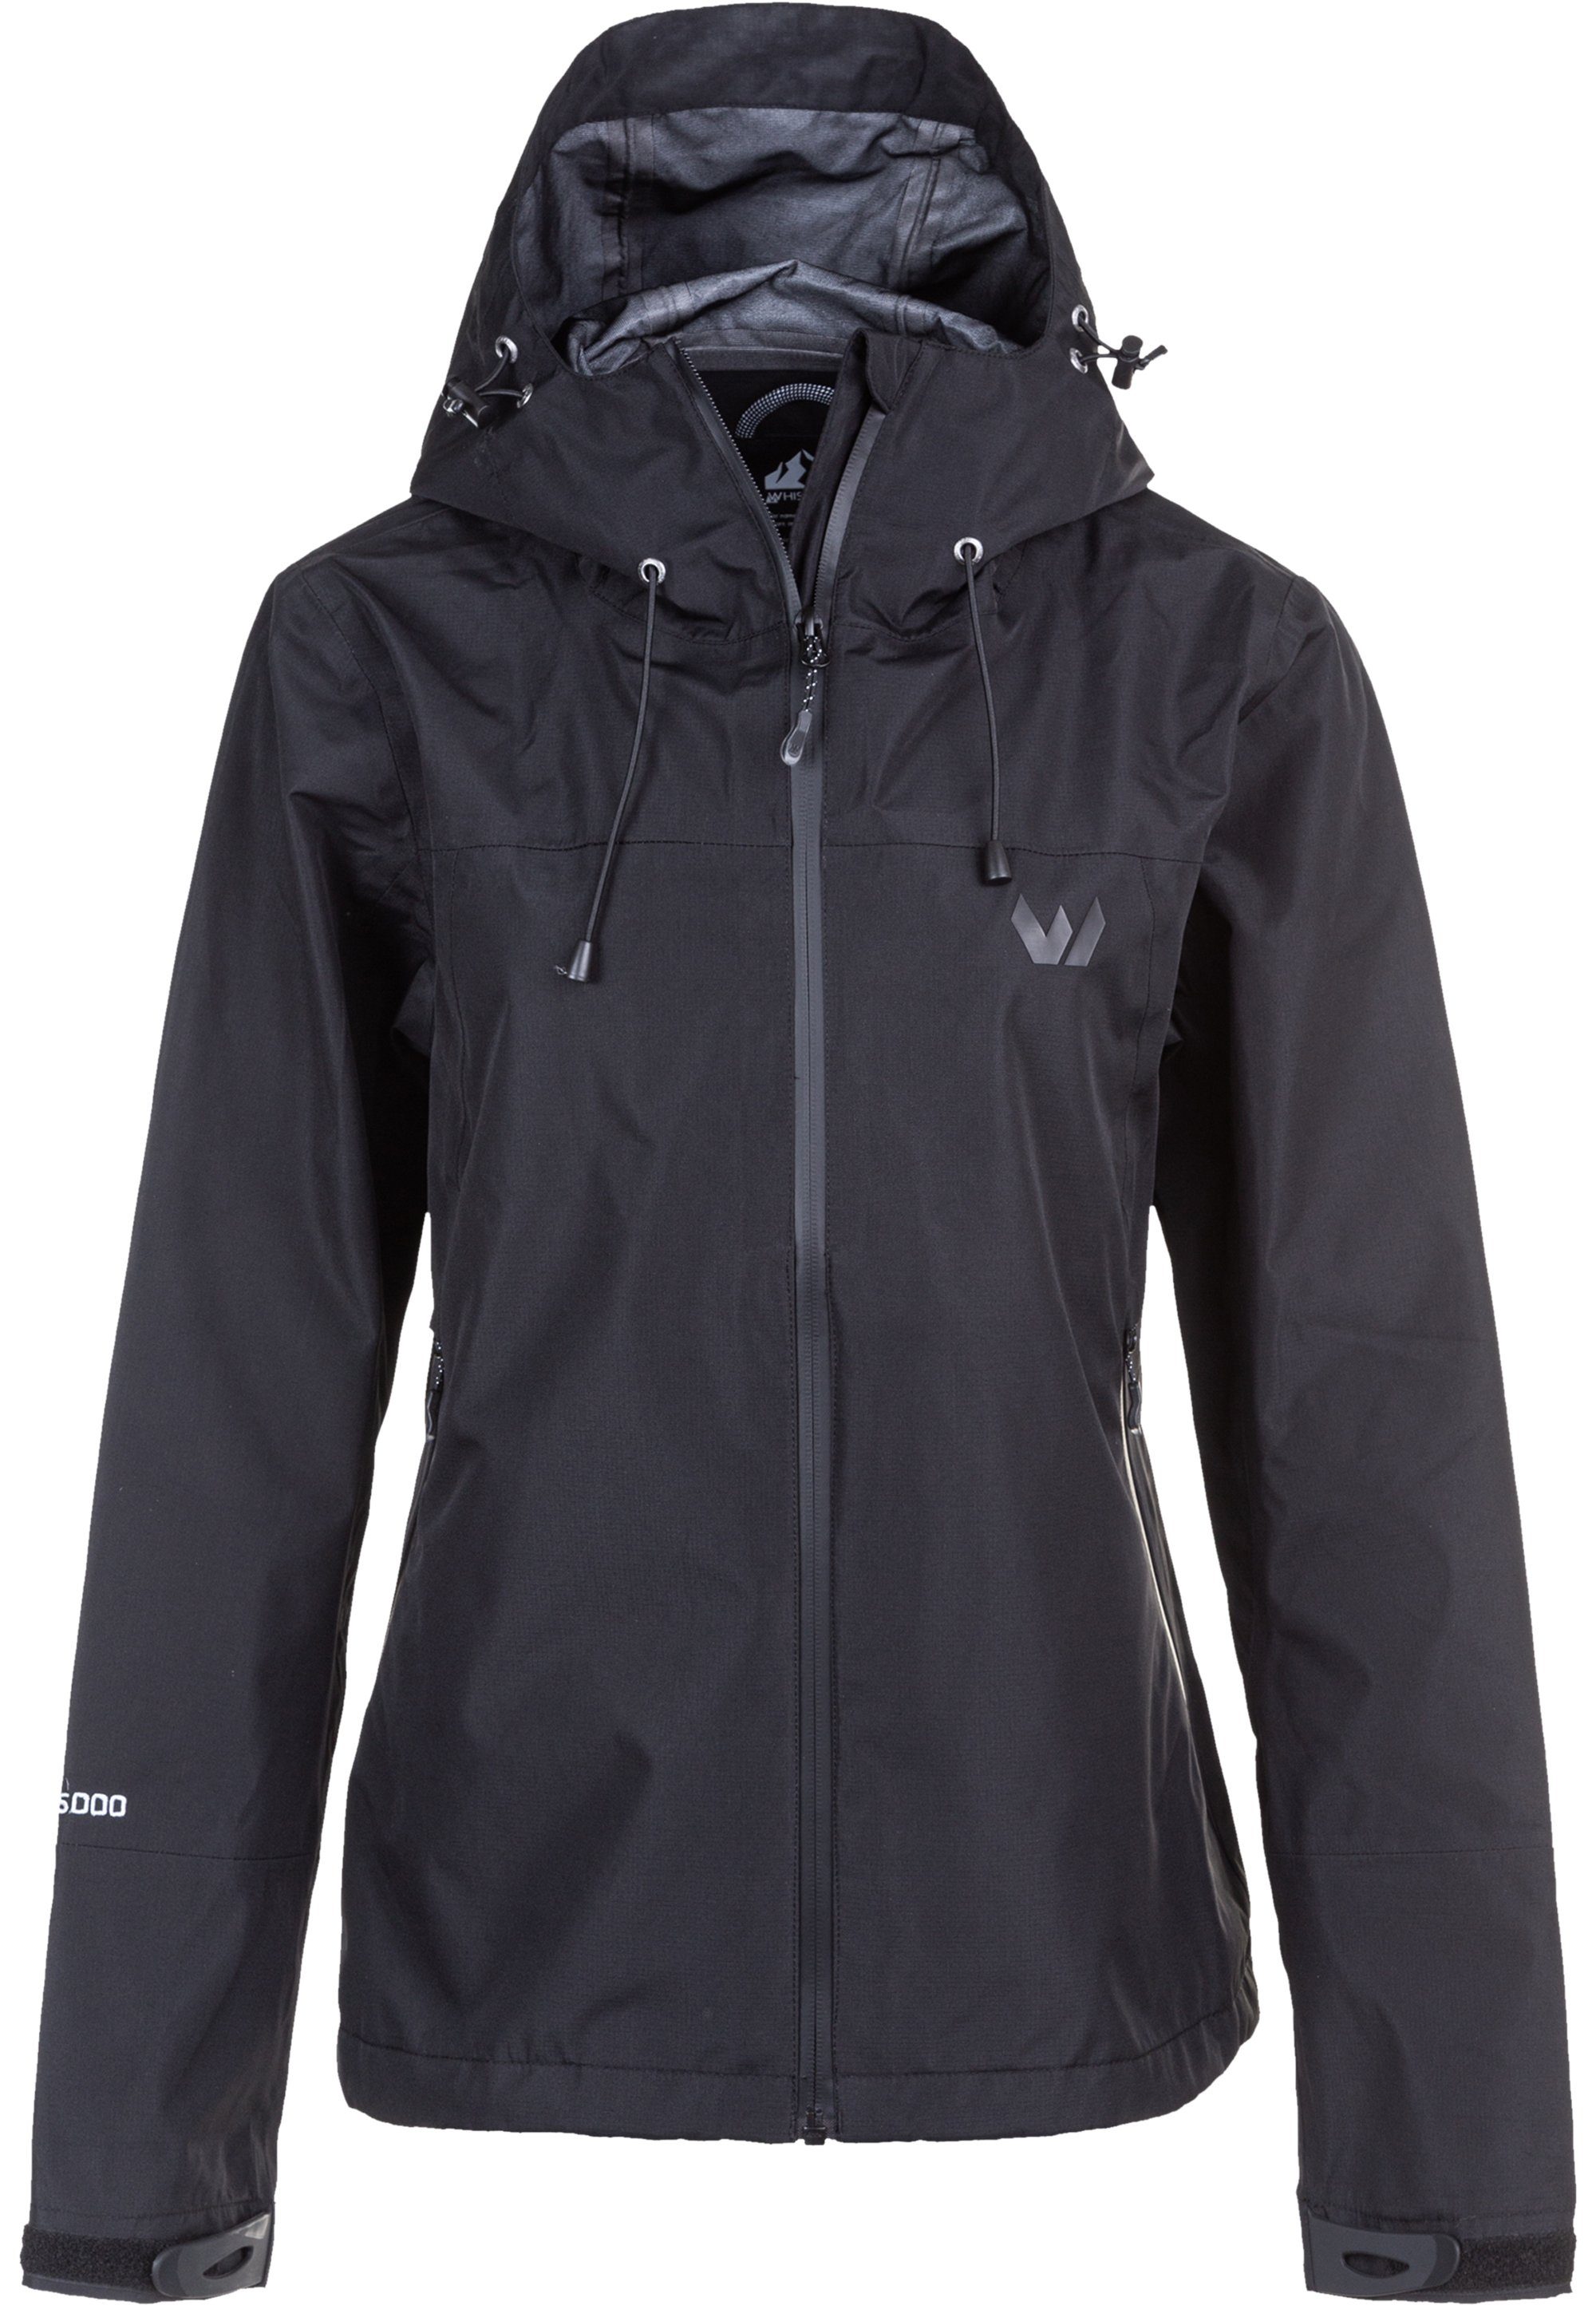 WHISTLER Softshelljacke 15000 mit BROOK Shell W-PRO praktischer schwarz Jacket Kapuze W